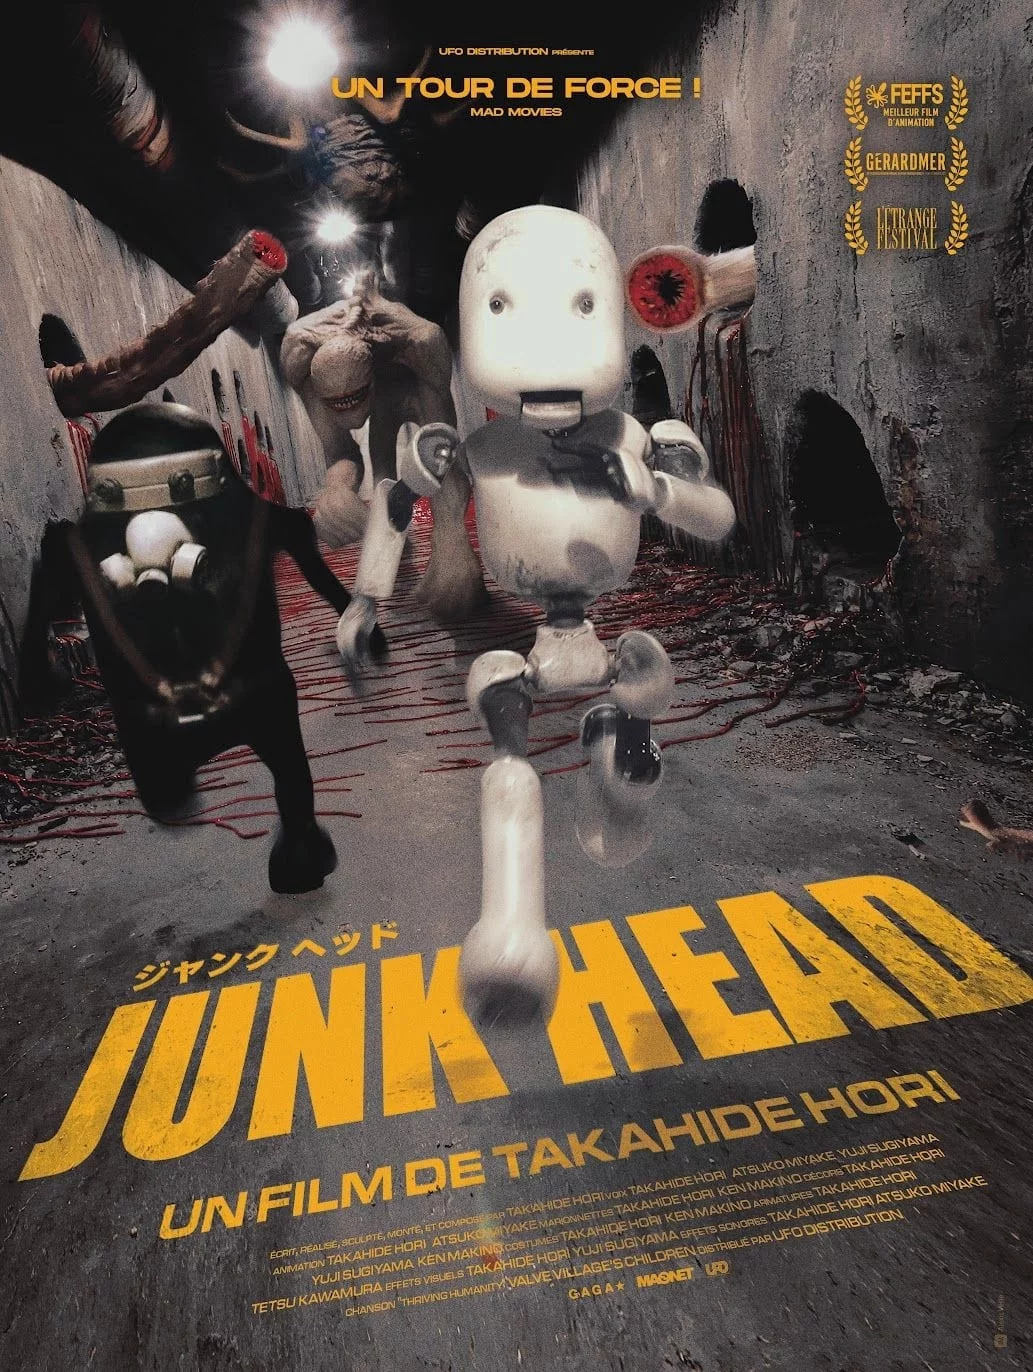 Photo du film : Junk Head